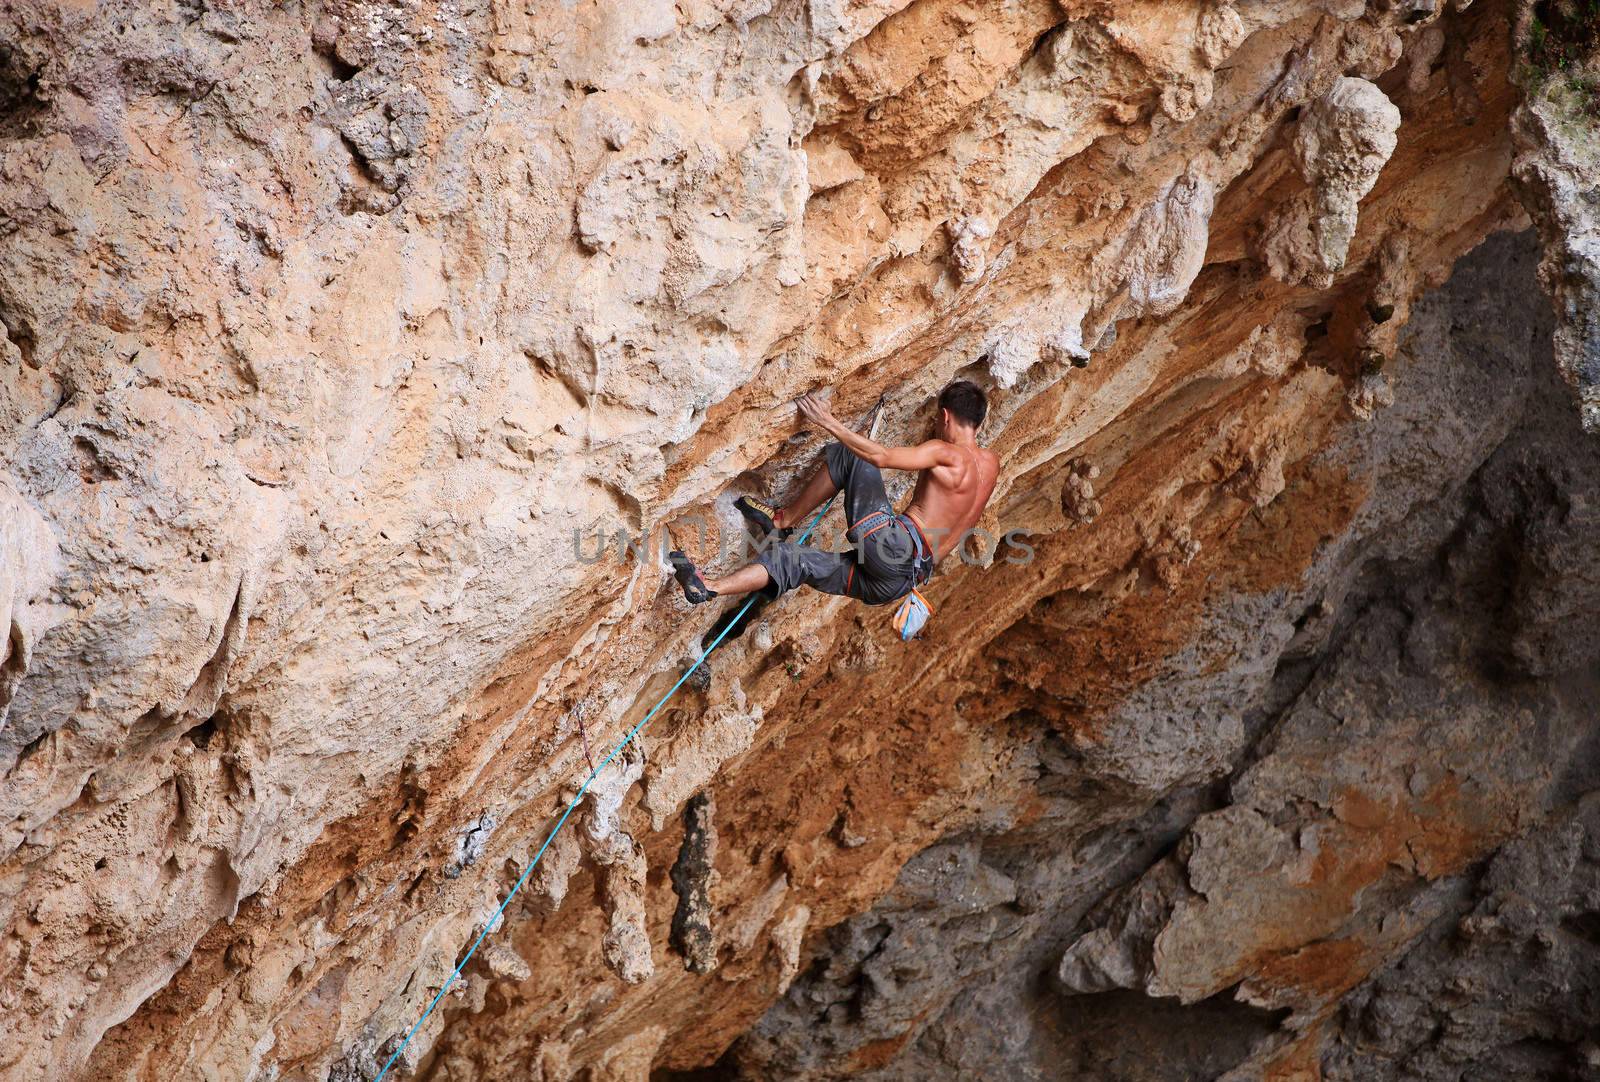 Rock climber struggling his way up by photobac